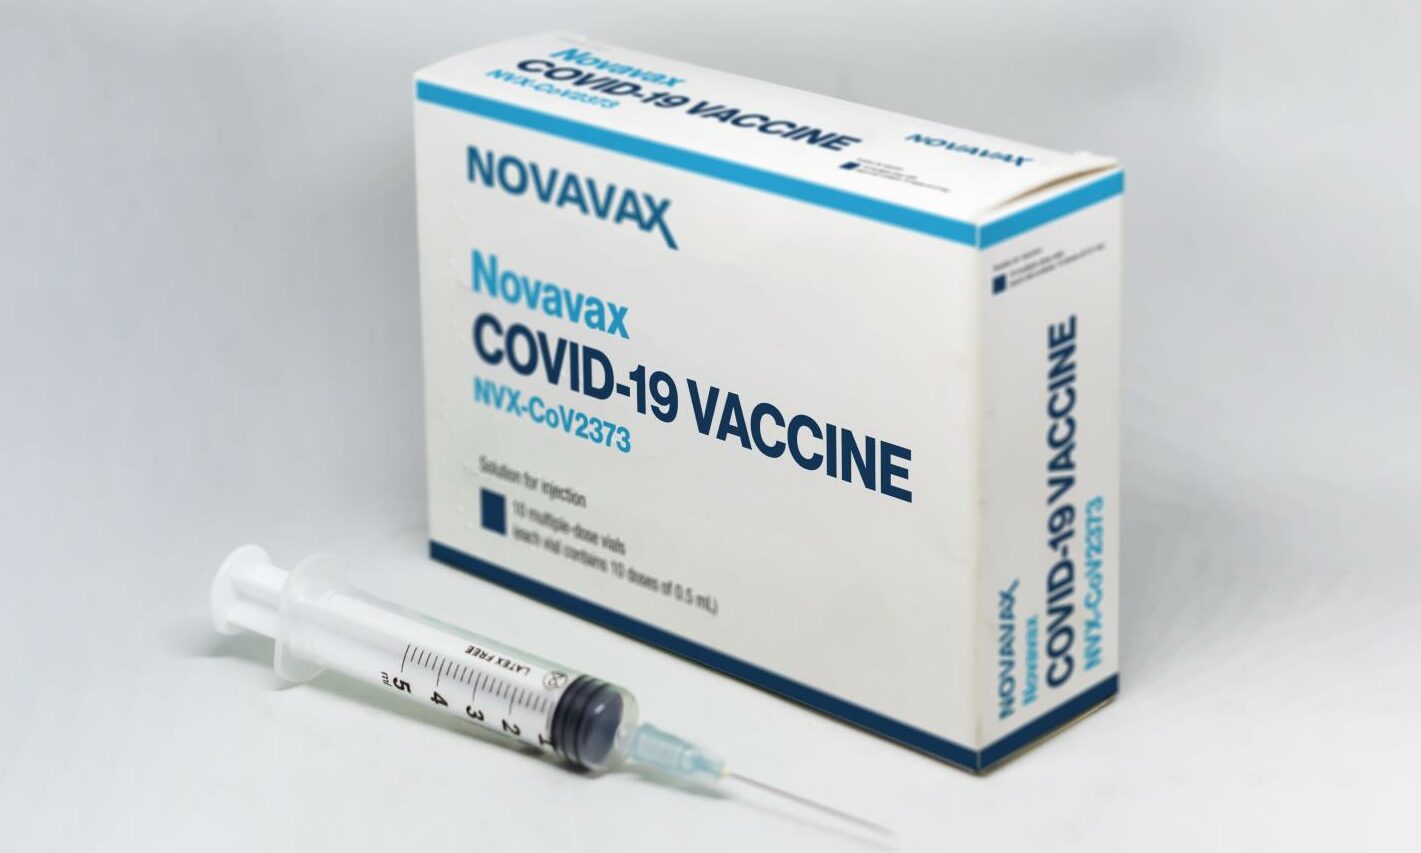 A Novavax branded box and syringe of Covid vaccine